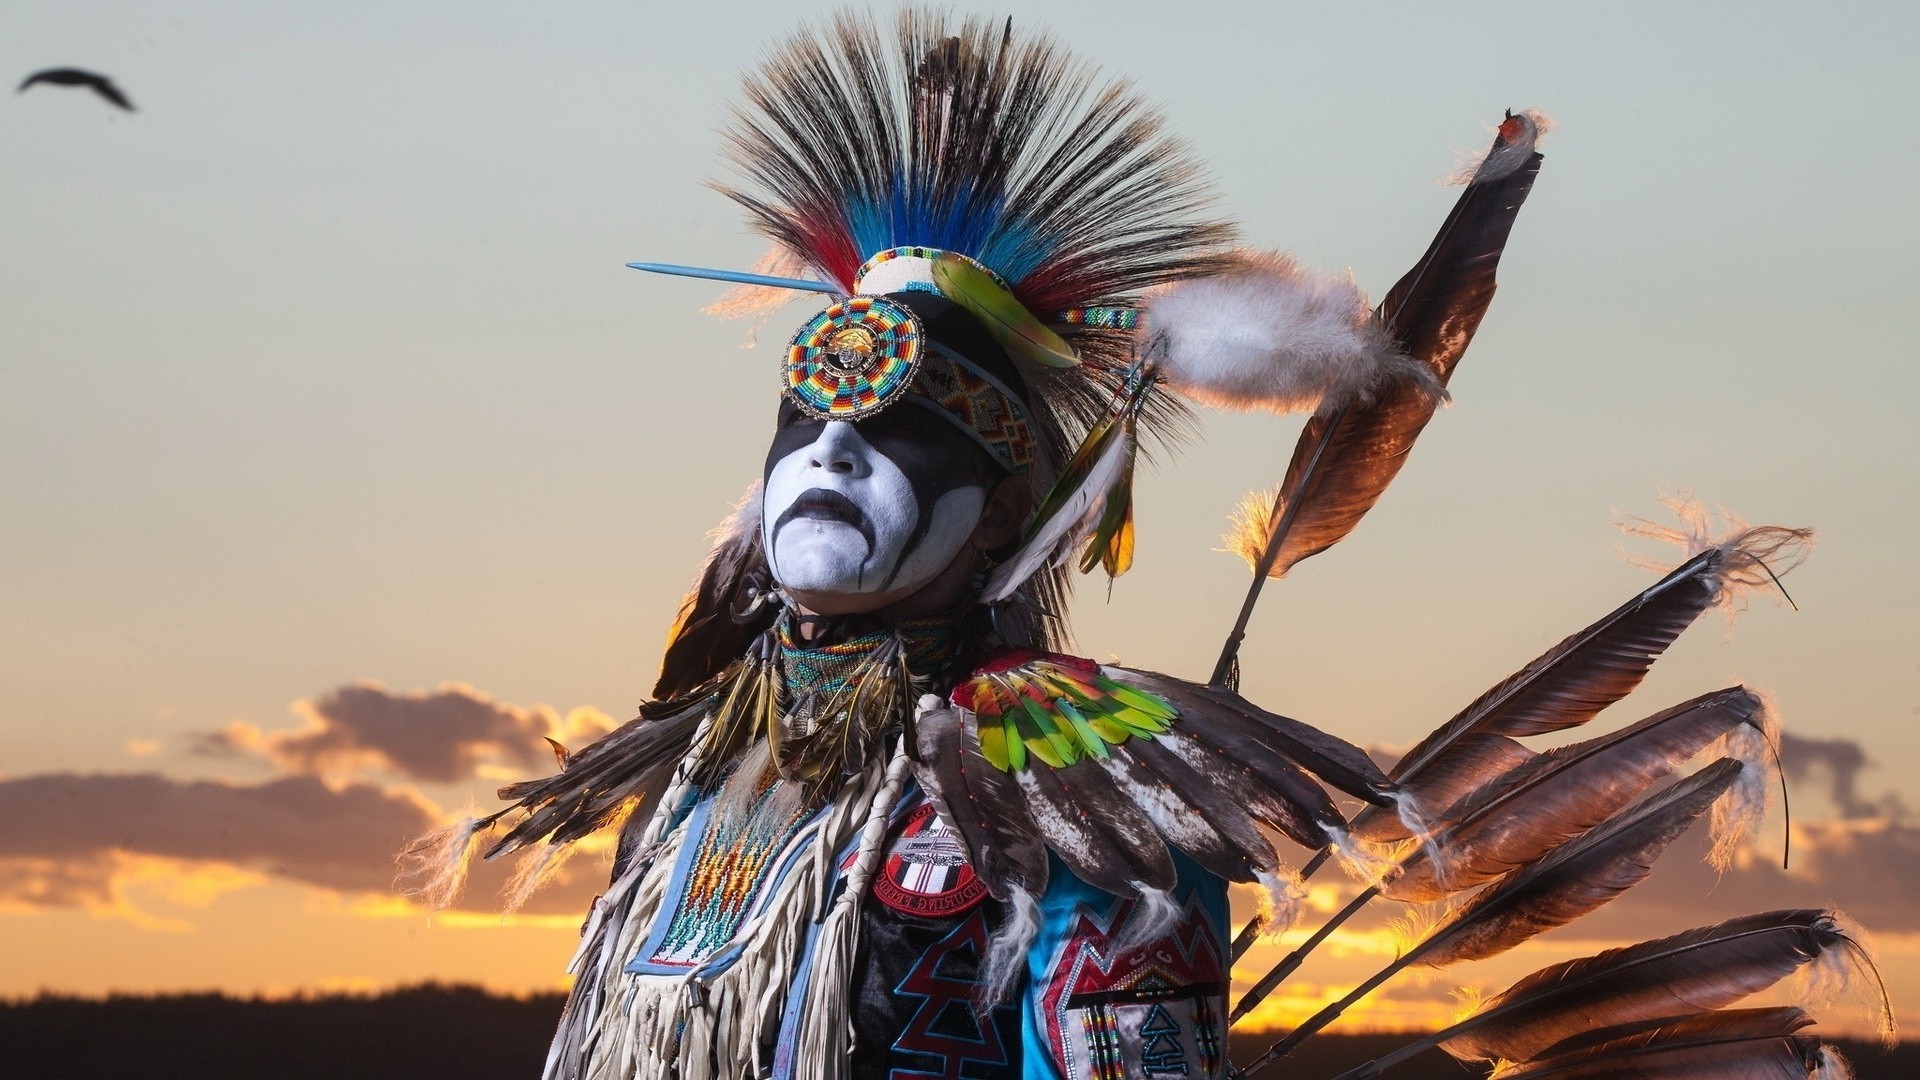 People 1920x1080 Native Americans headdress feathers men